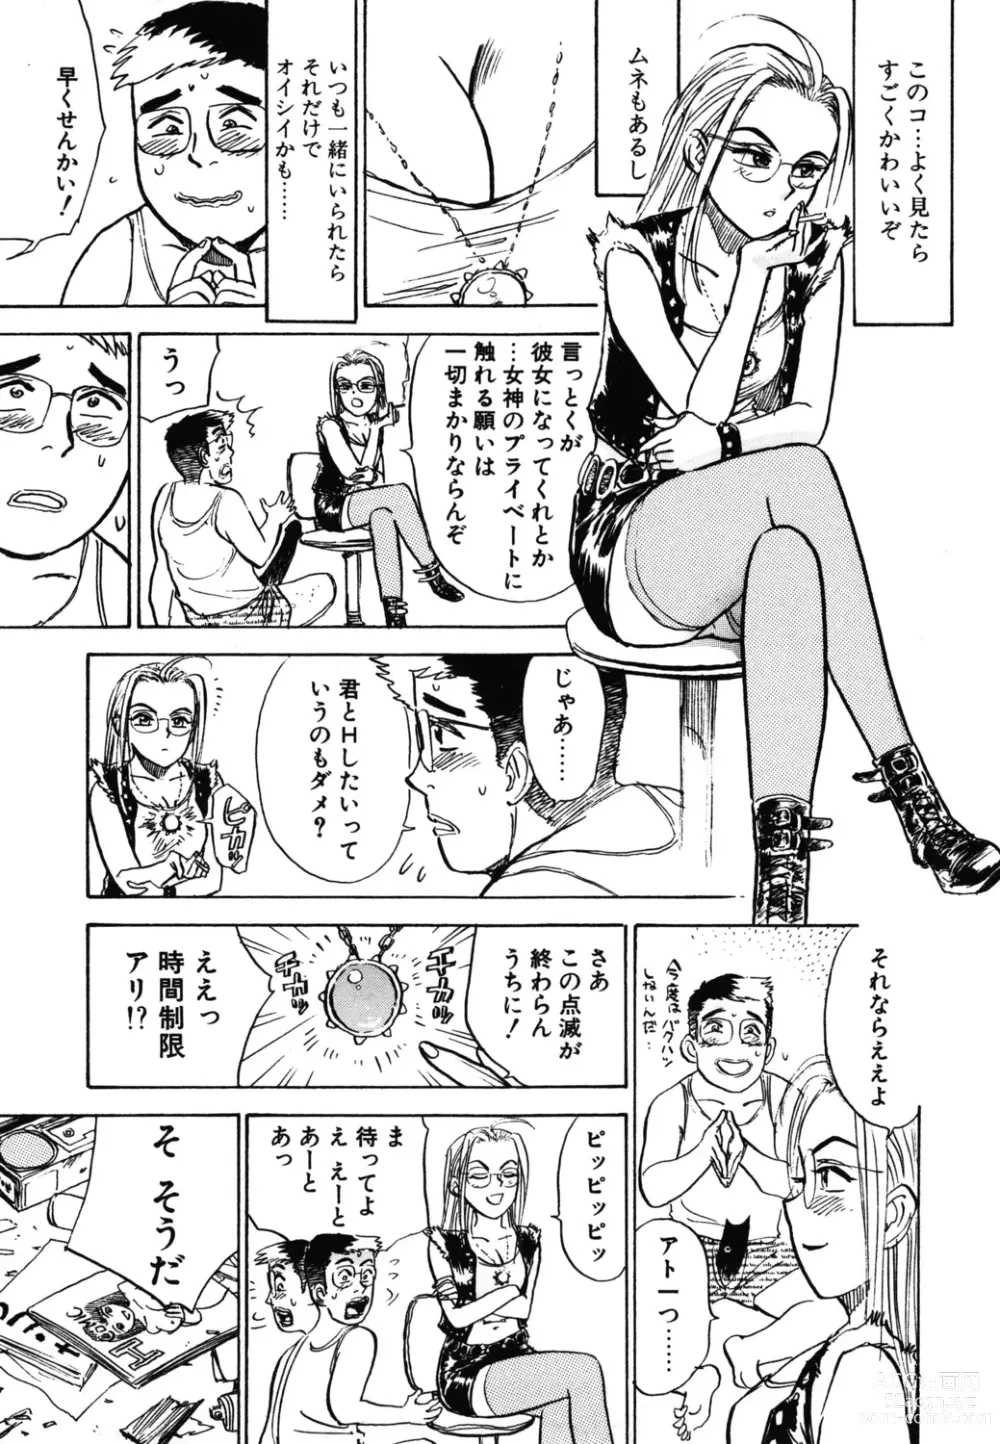 Page 171 of manga Abunai Reiko Sensei 1